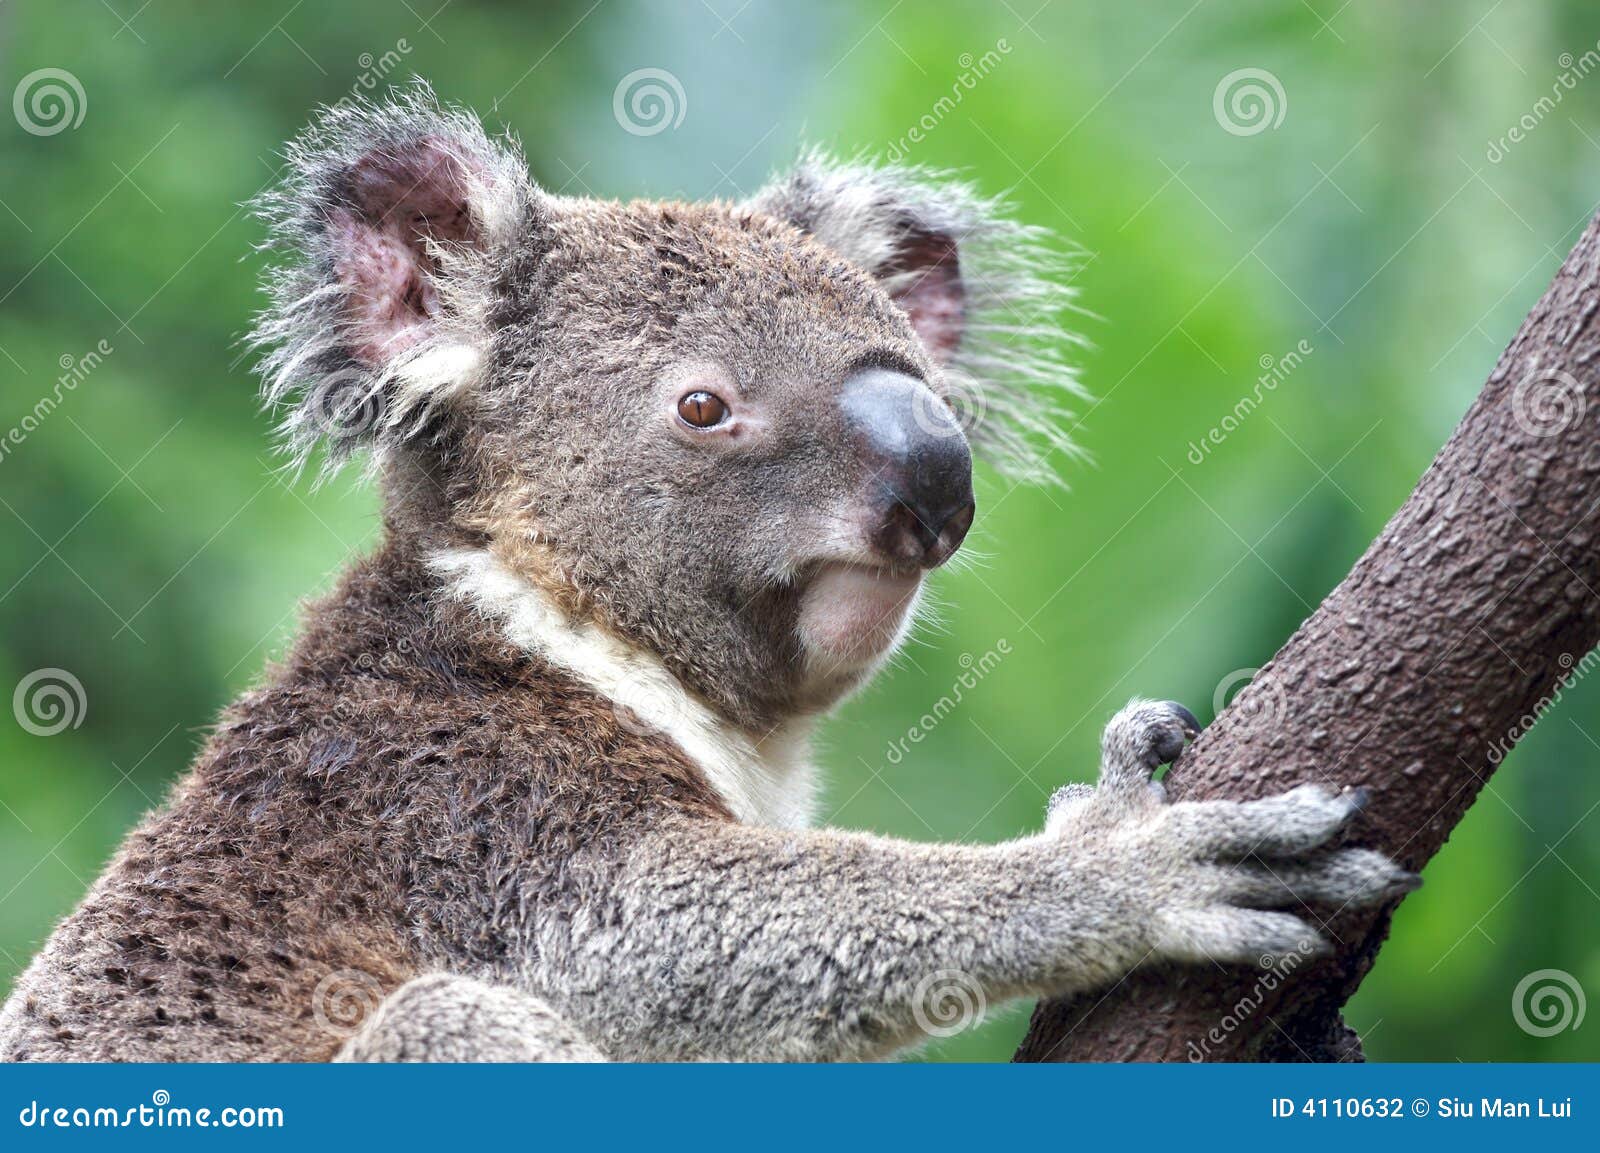 koala in australia